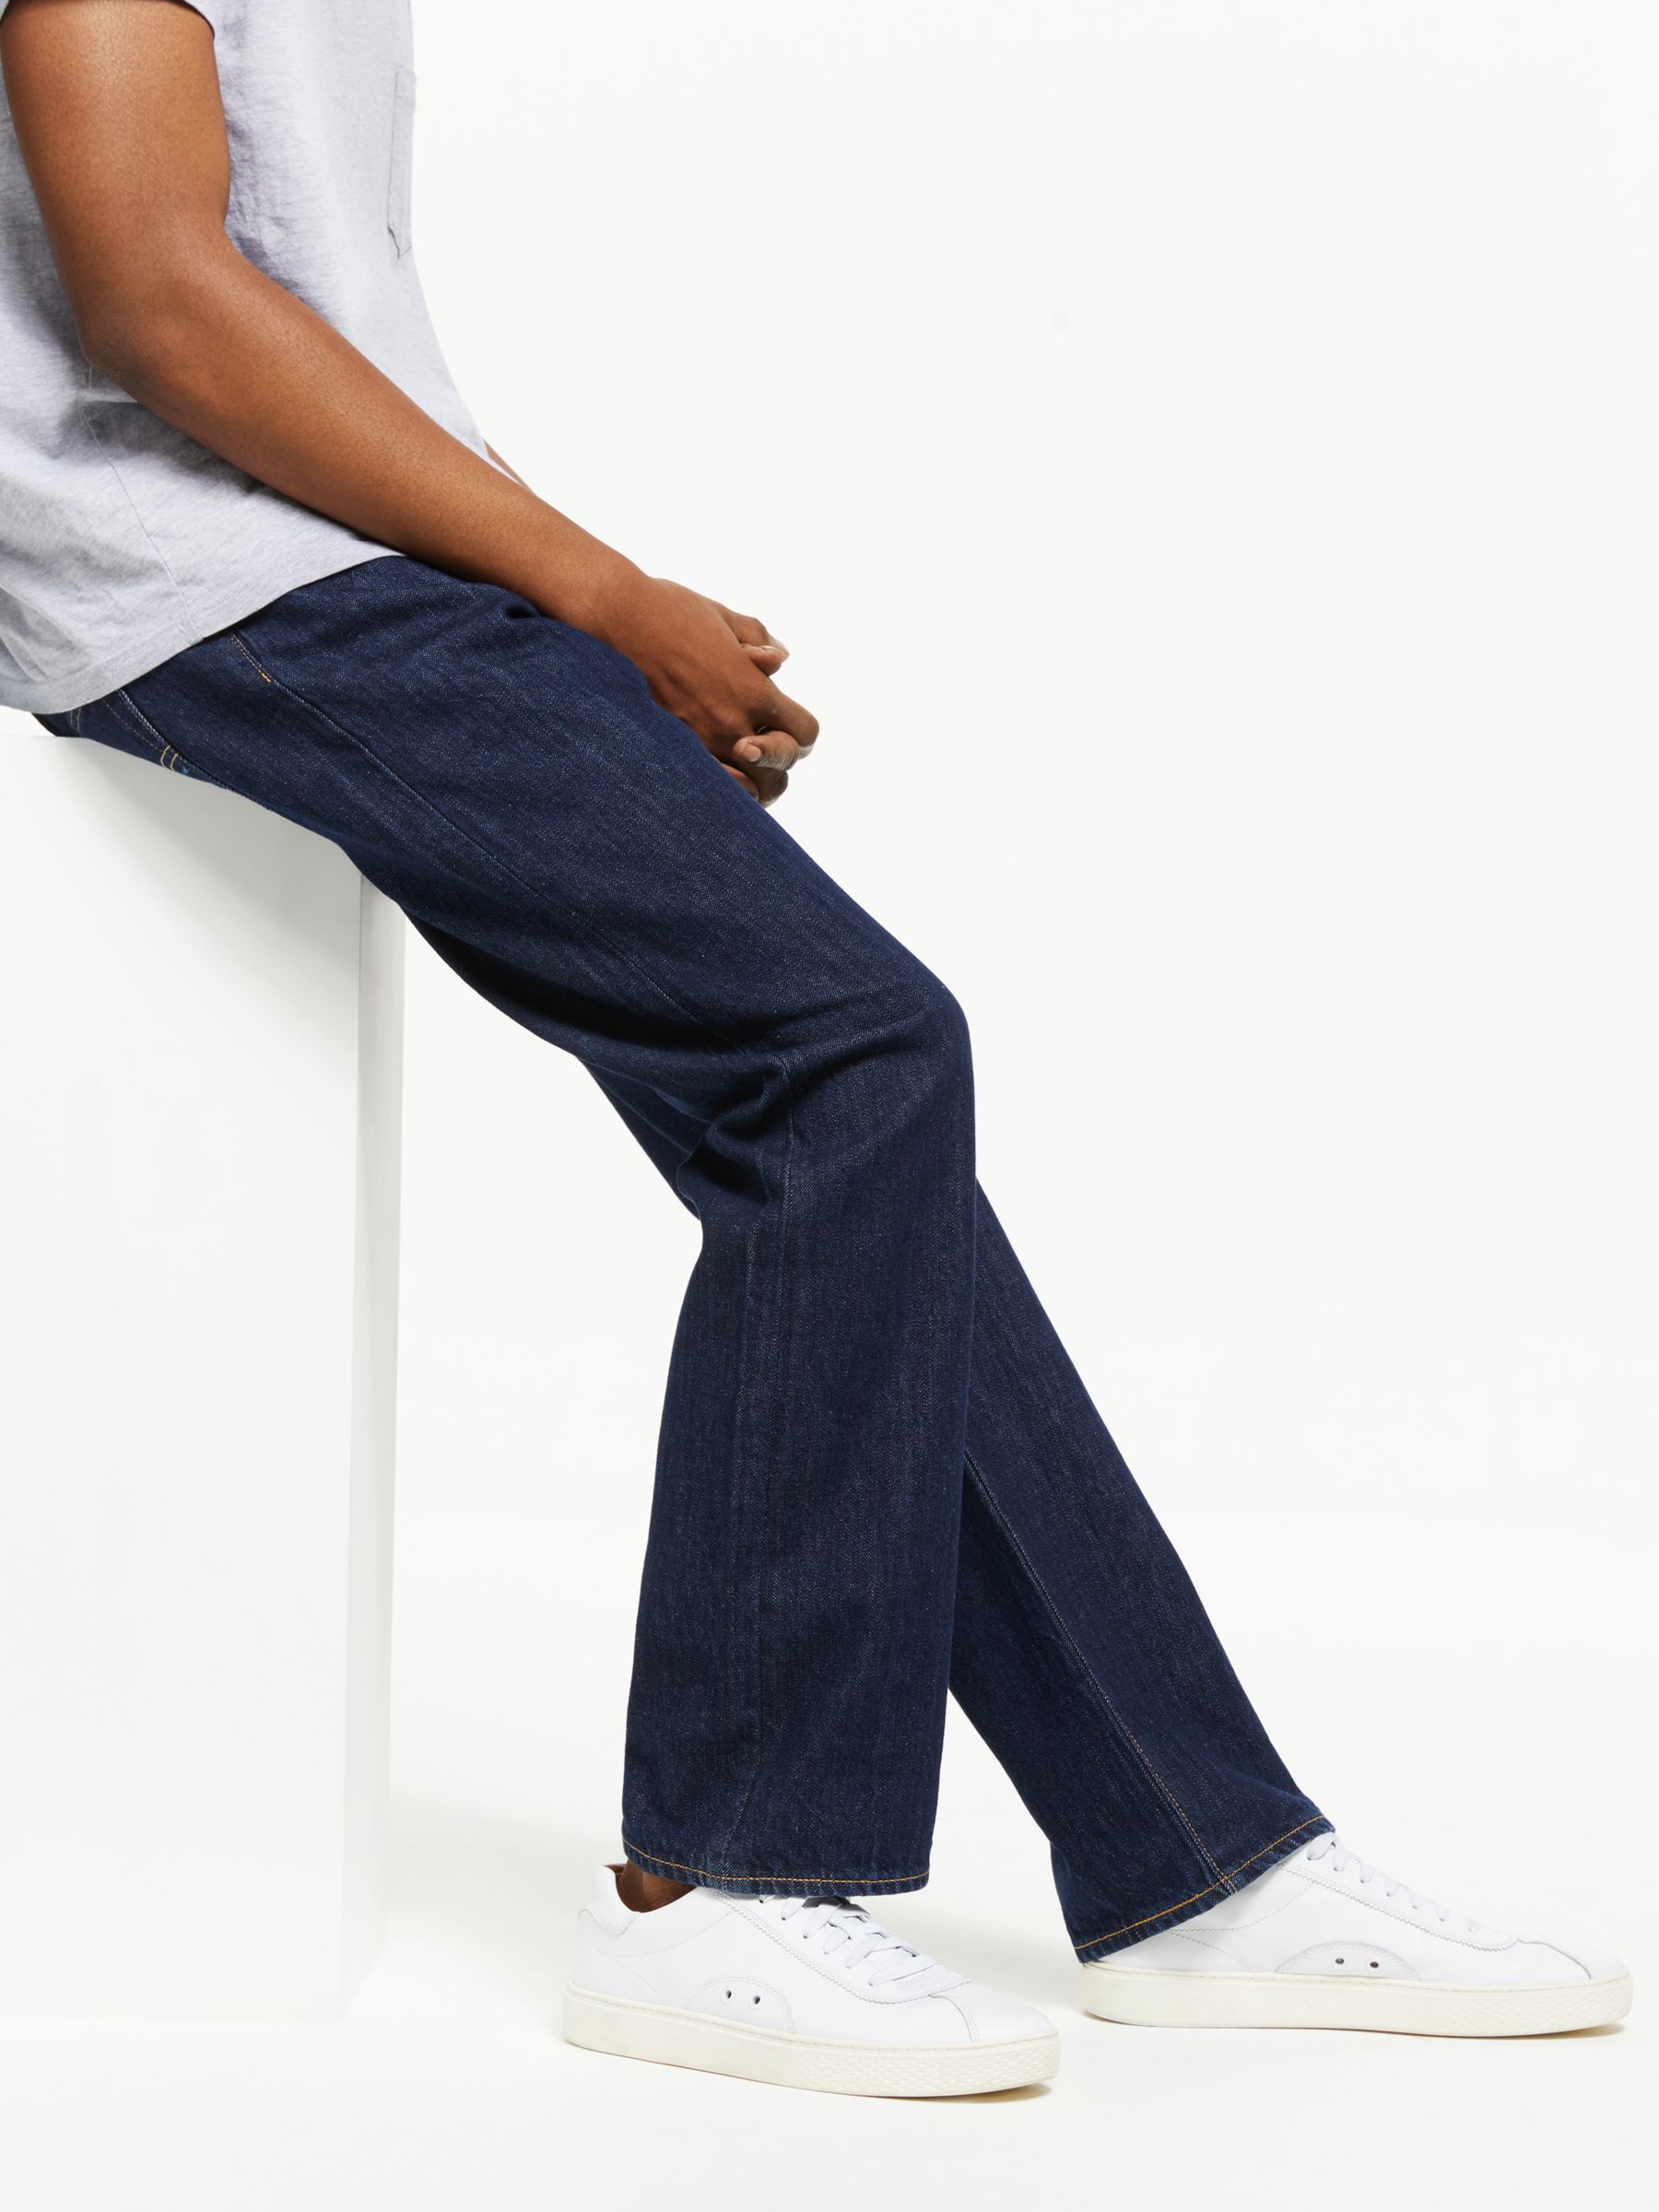 Buy Levi's 501 Original Straight Jeans, One Wash | John Lewis